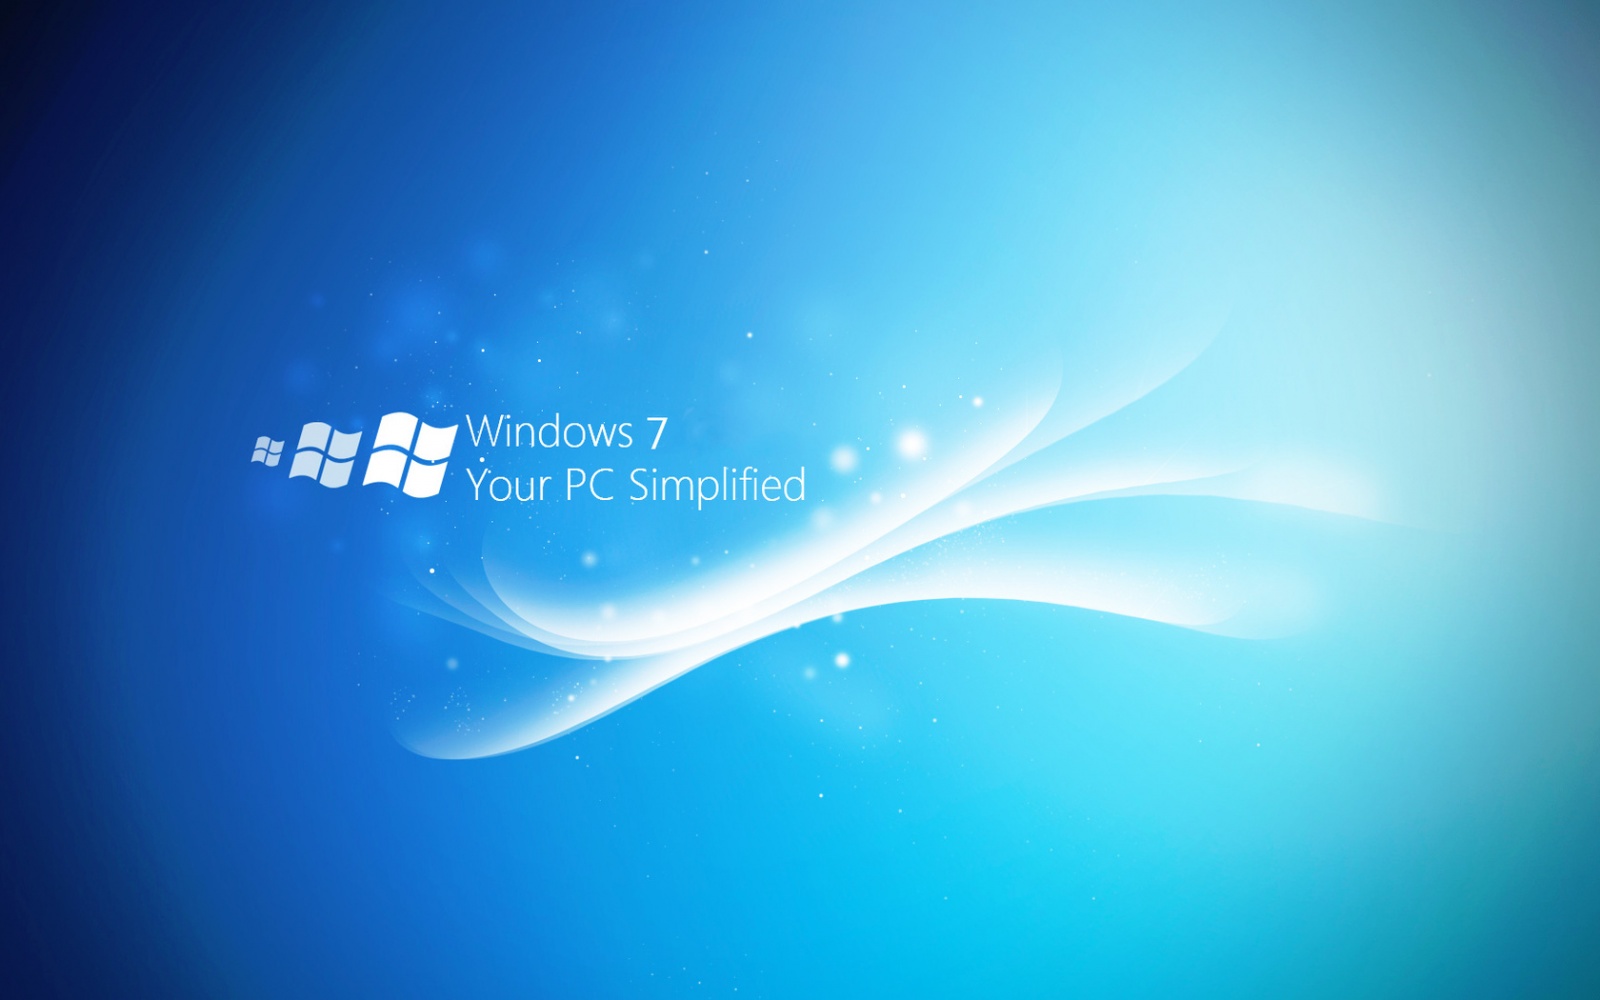 Windows 7 Simplified Wallpapers - 8810